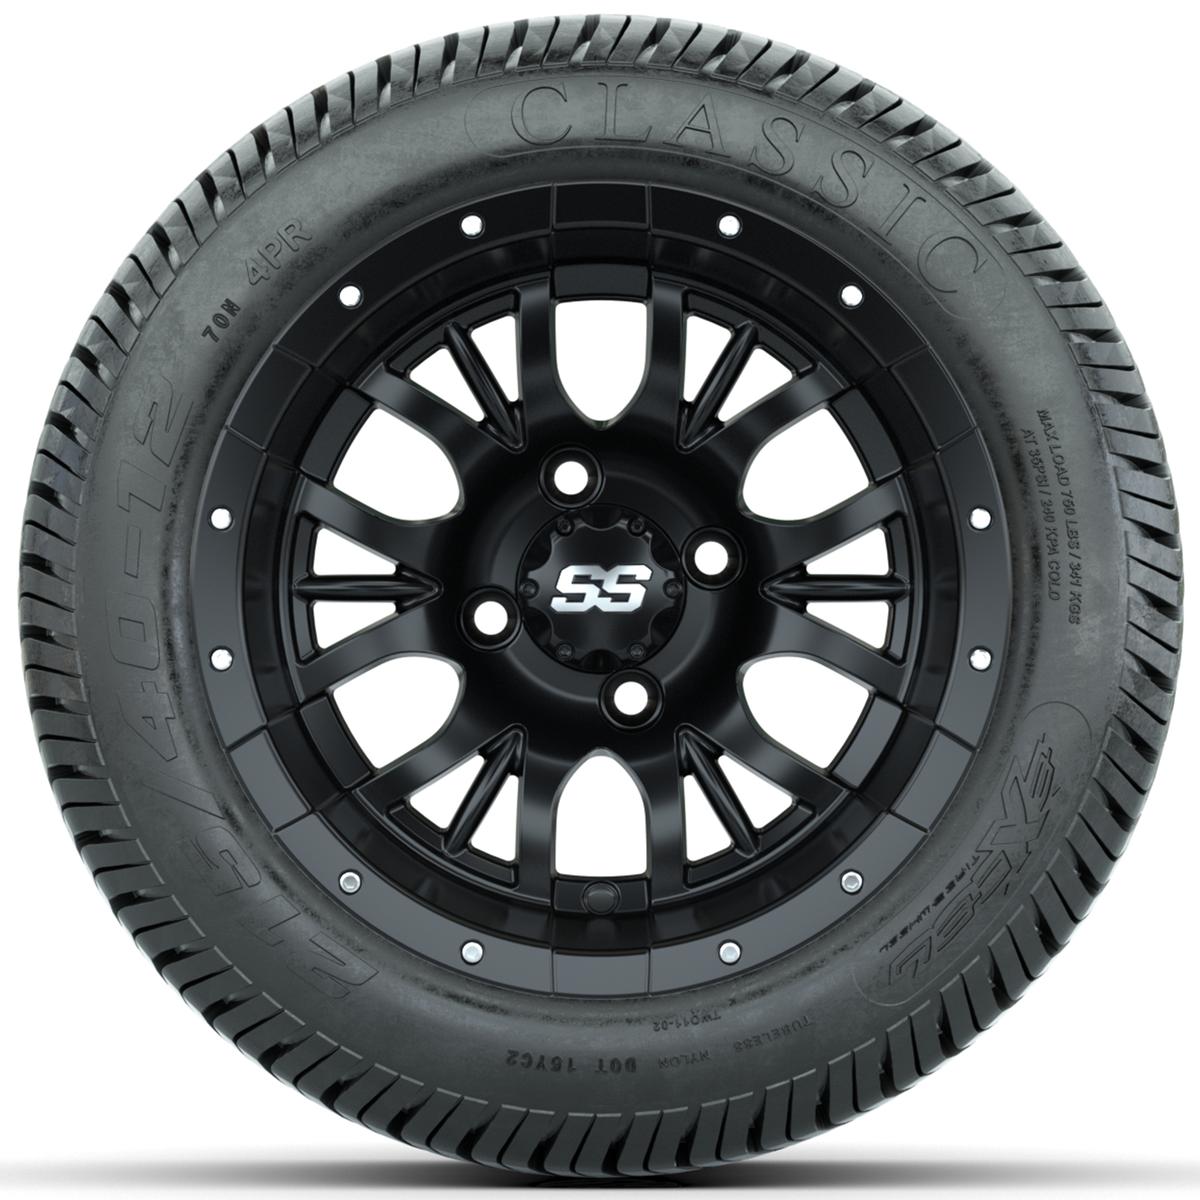 Set of (4) 12 in GTW Diesel Wheels with 215/40-12 Excel Classic Street Tires